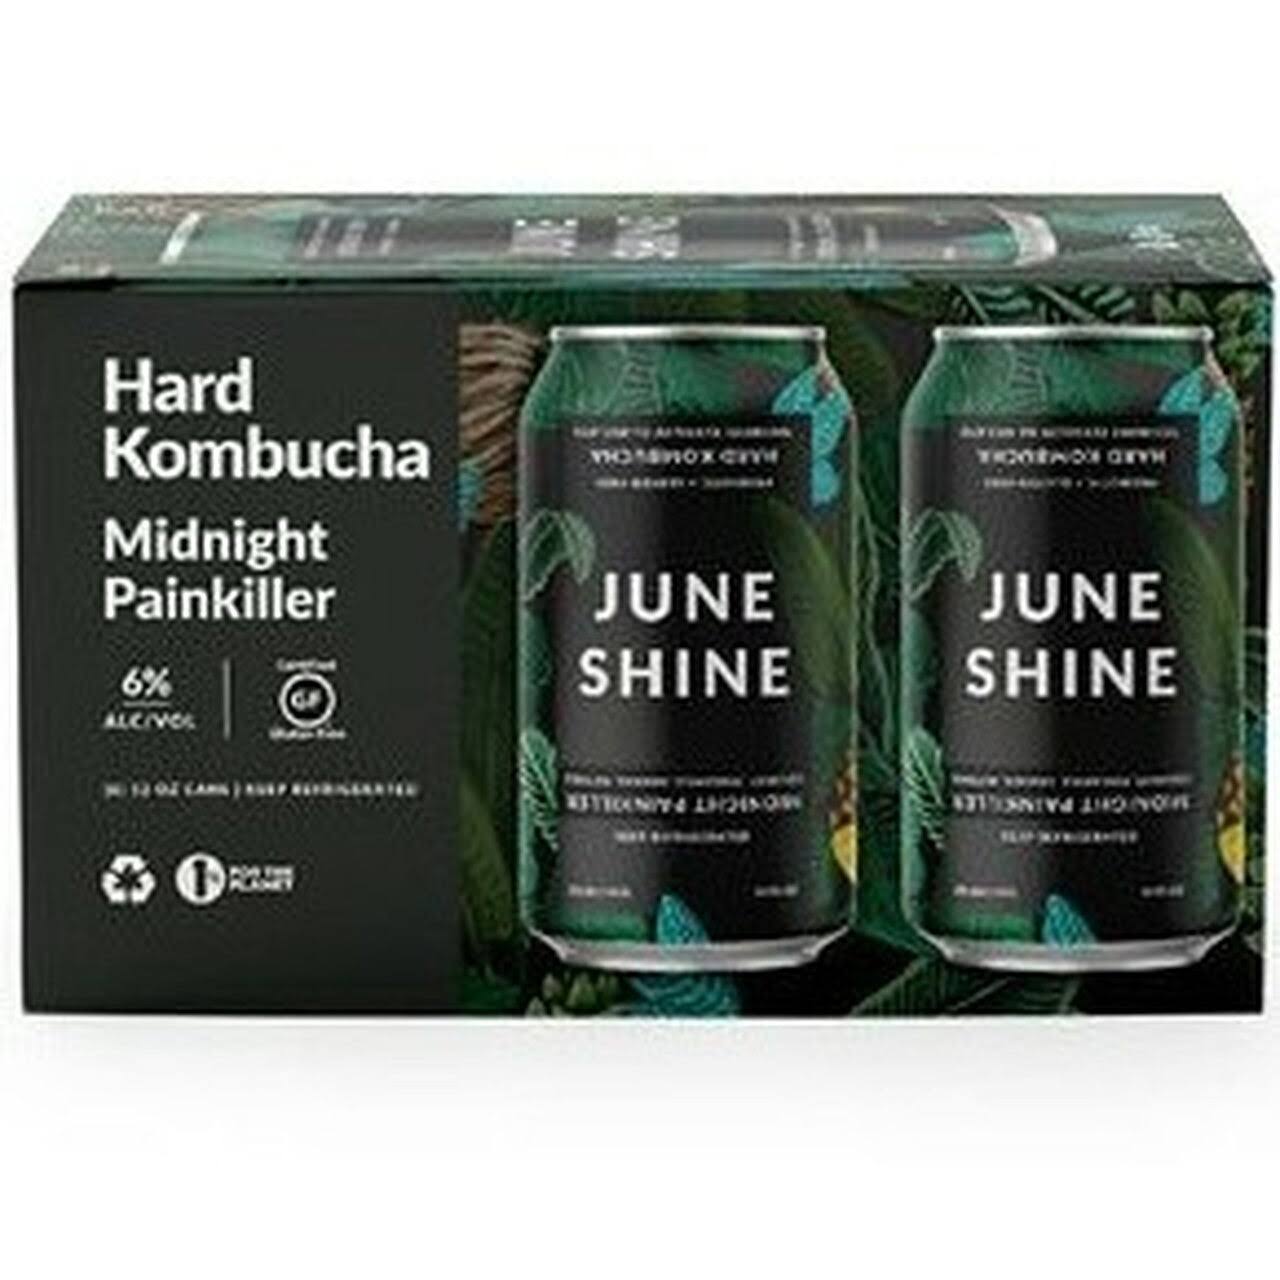 June Shine Hard Kombucha, Midnight Painkiller - 6 pack, 12 fl oz cans